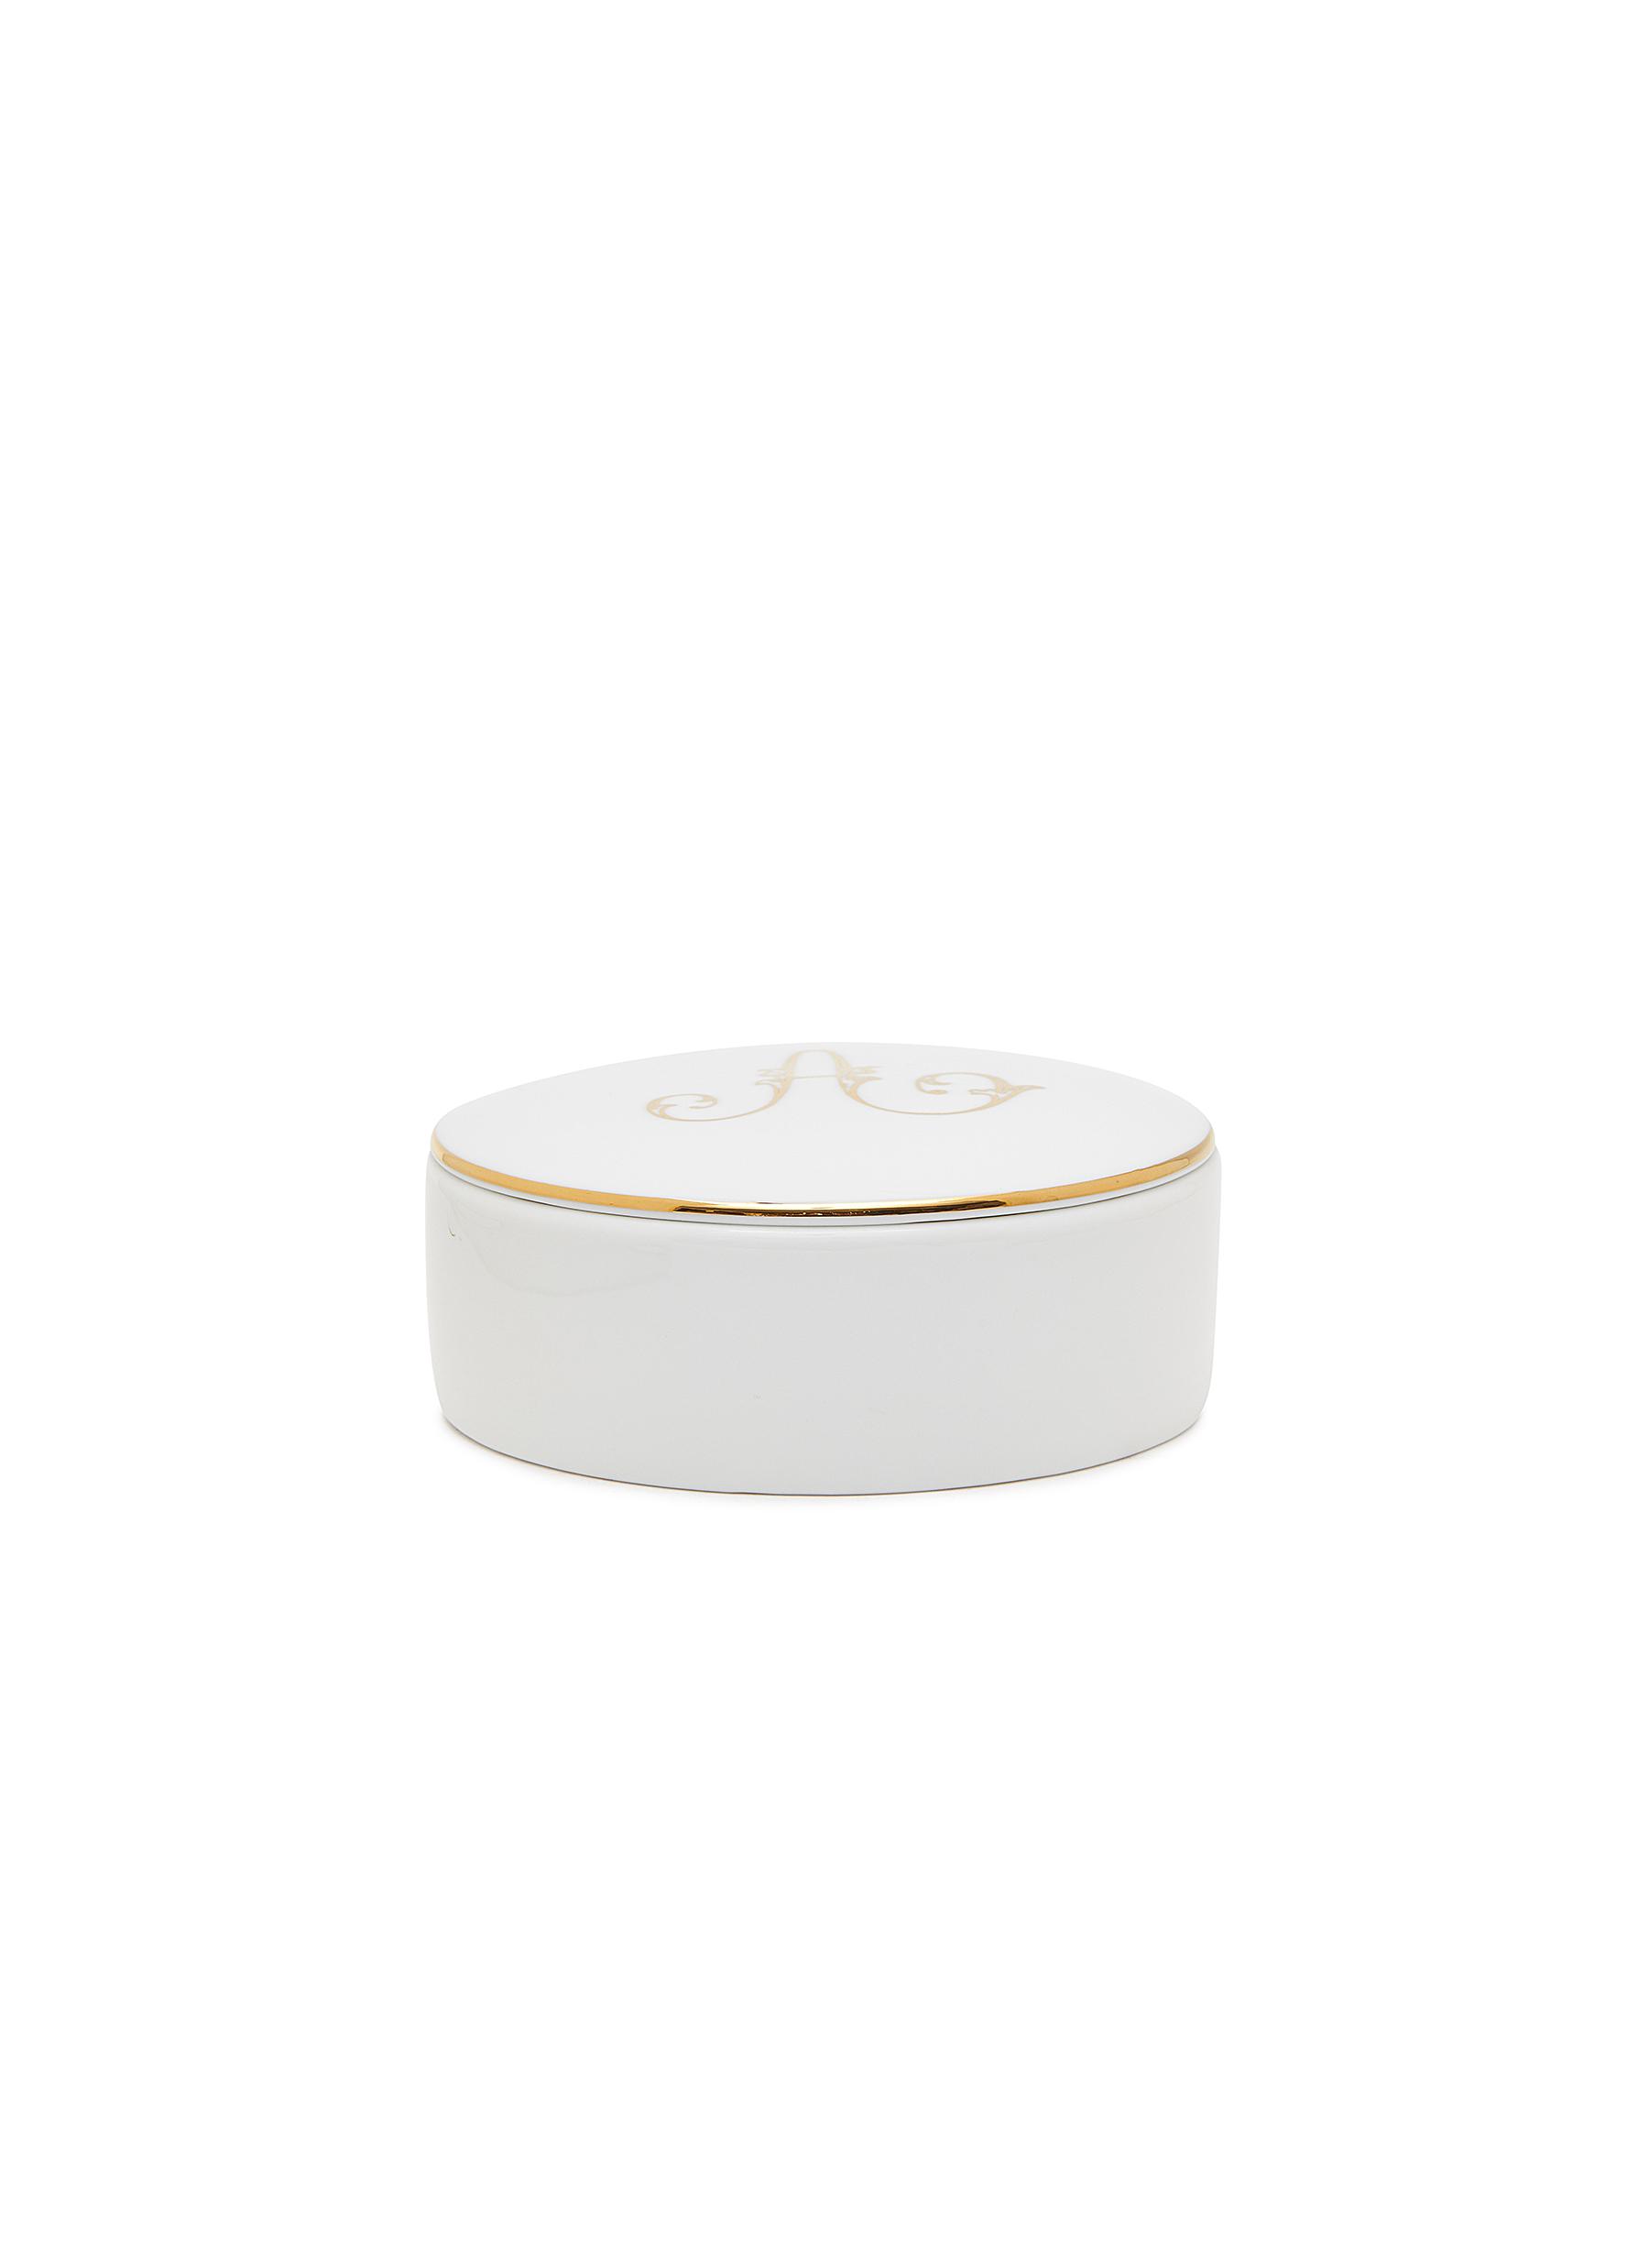 Corona Monogram Oro’ A Initial Porcelain Round Box